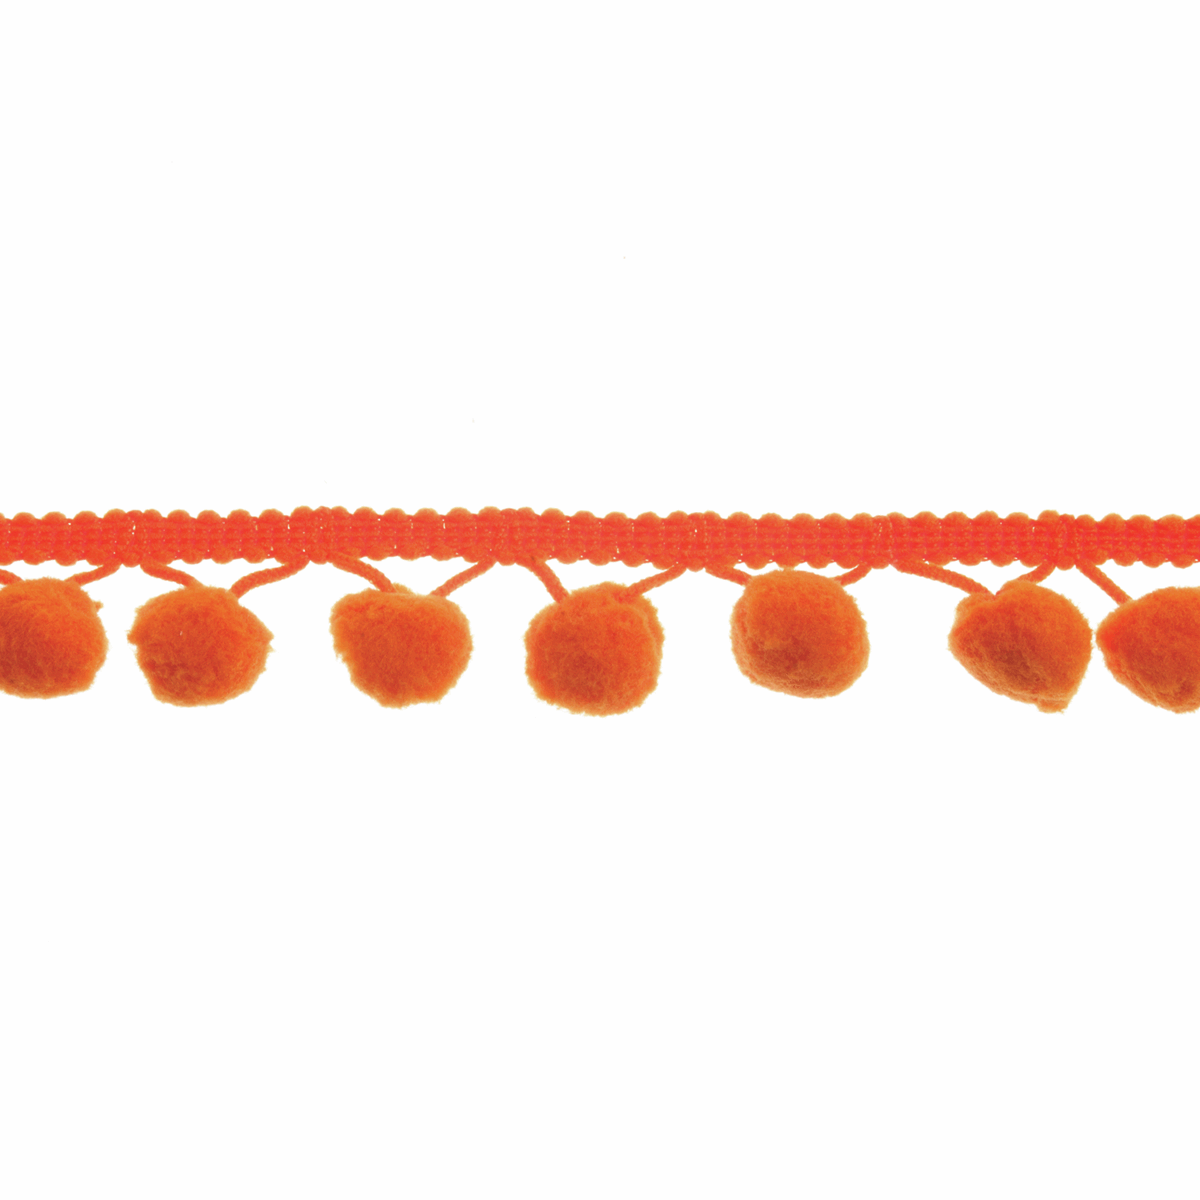 Trimits Large Orange Pom Pom Trim Edging - 18m x 20mm (Full roll)